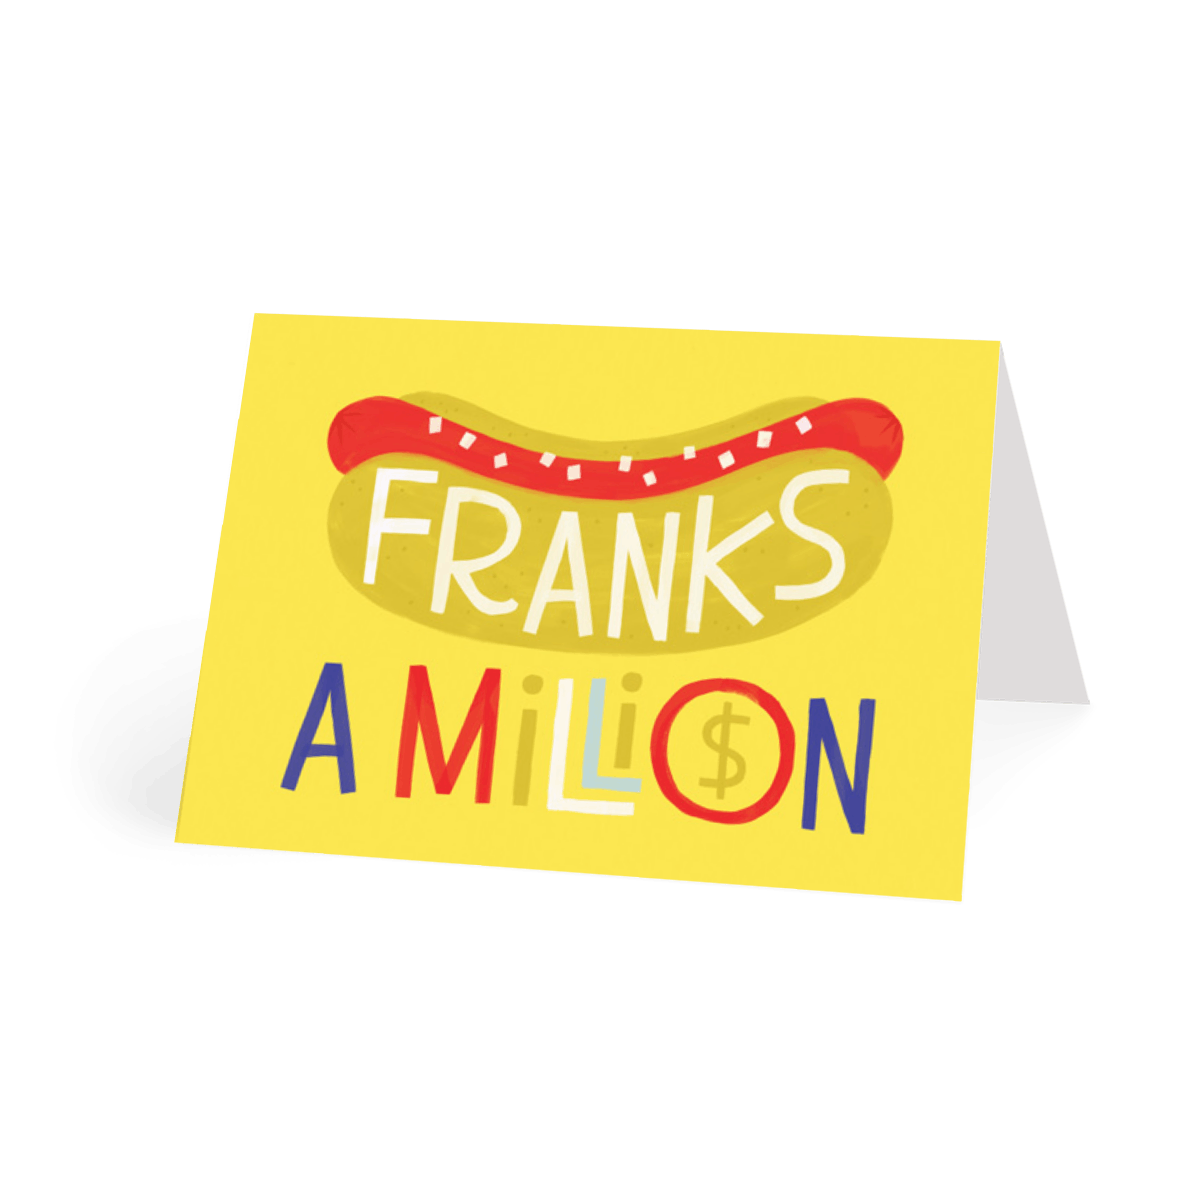 Franks A Million